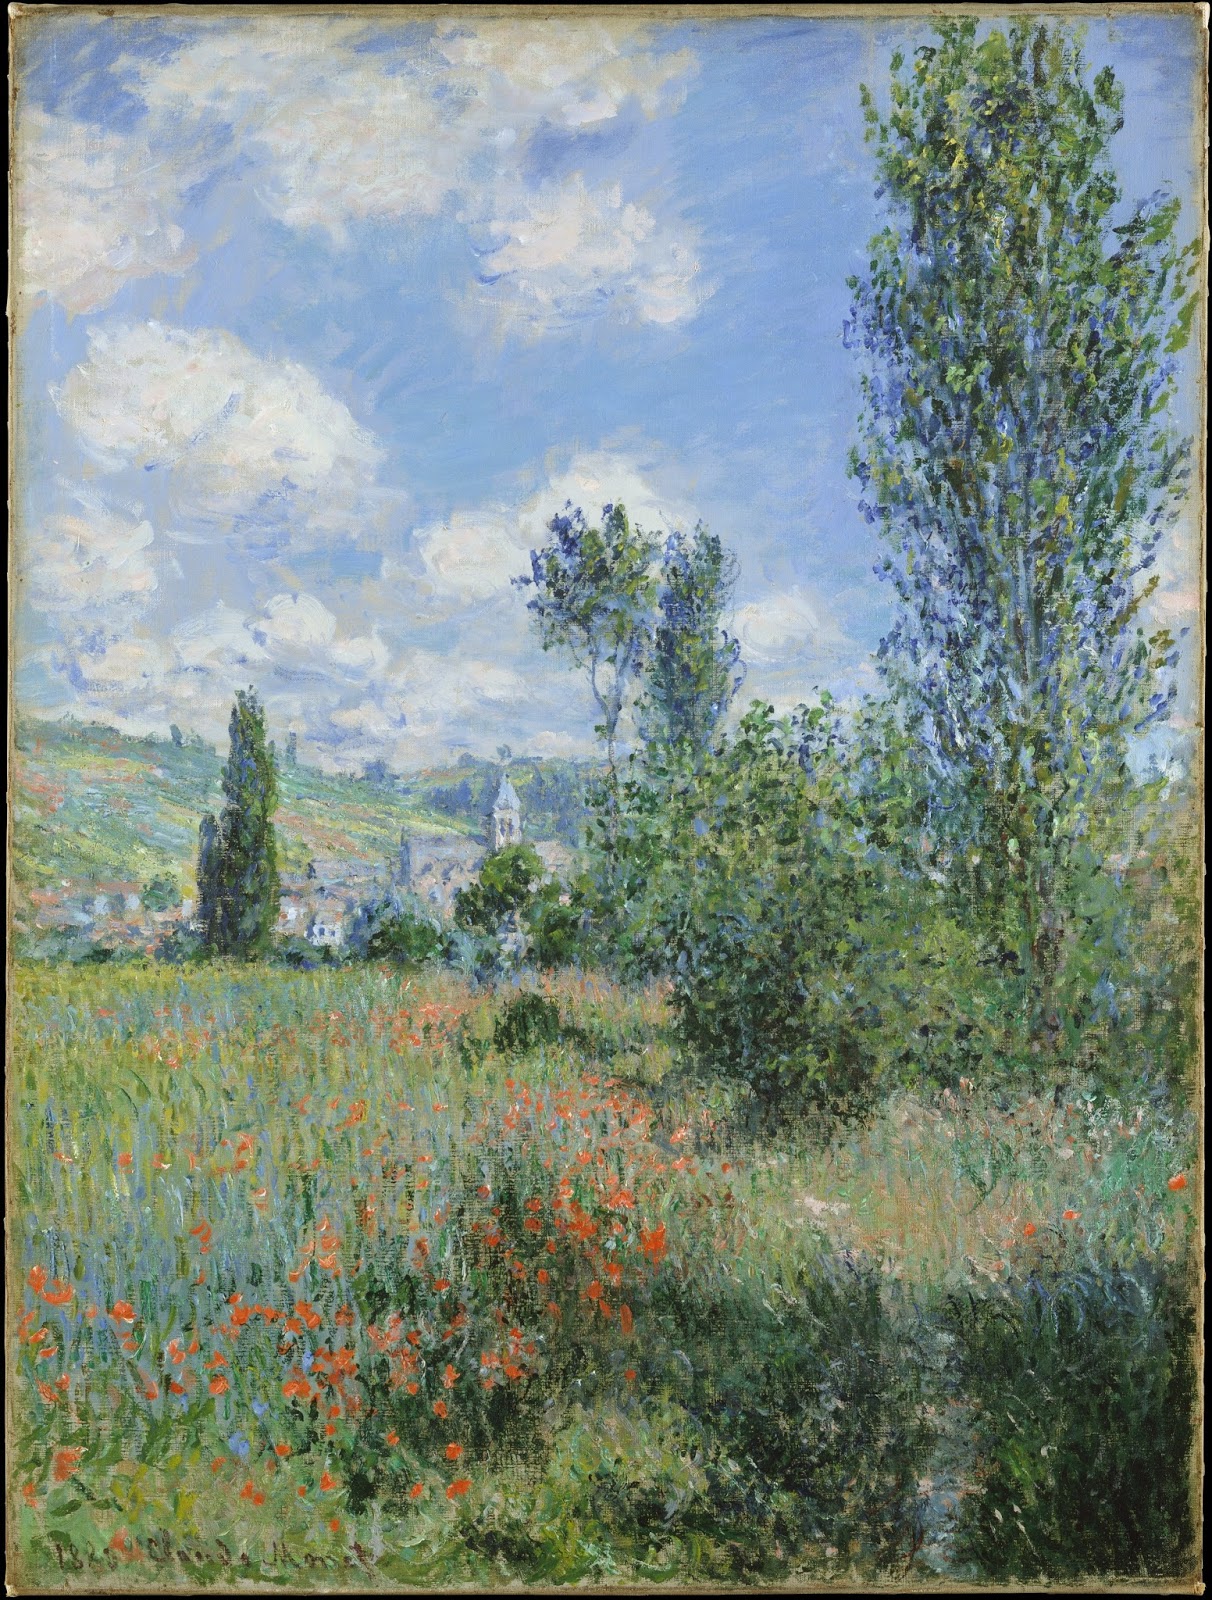 Claude+Monet-1840-1926 (950).jpg